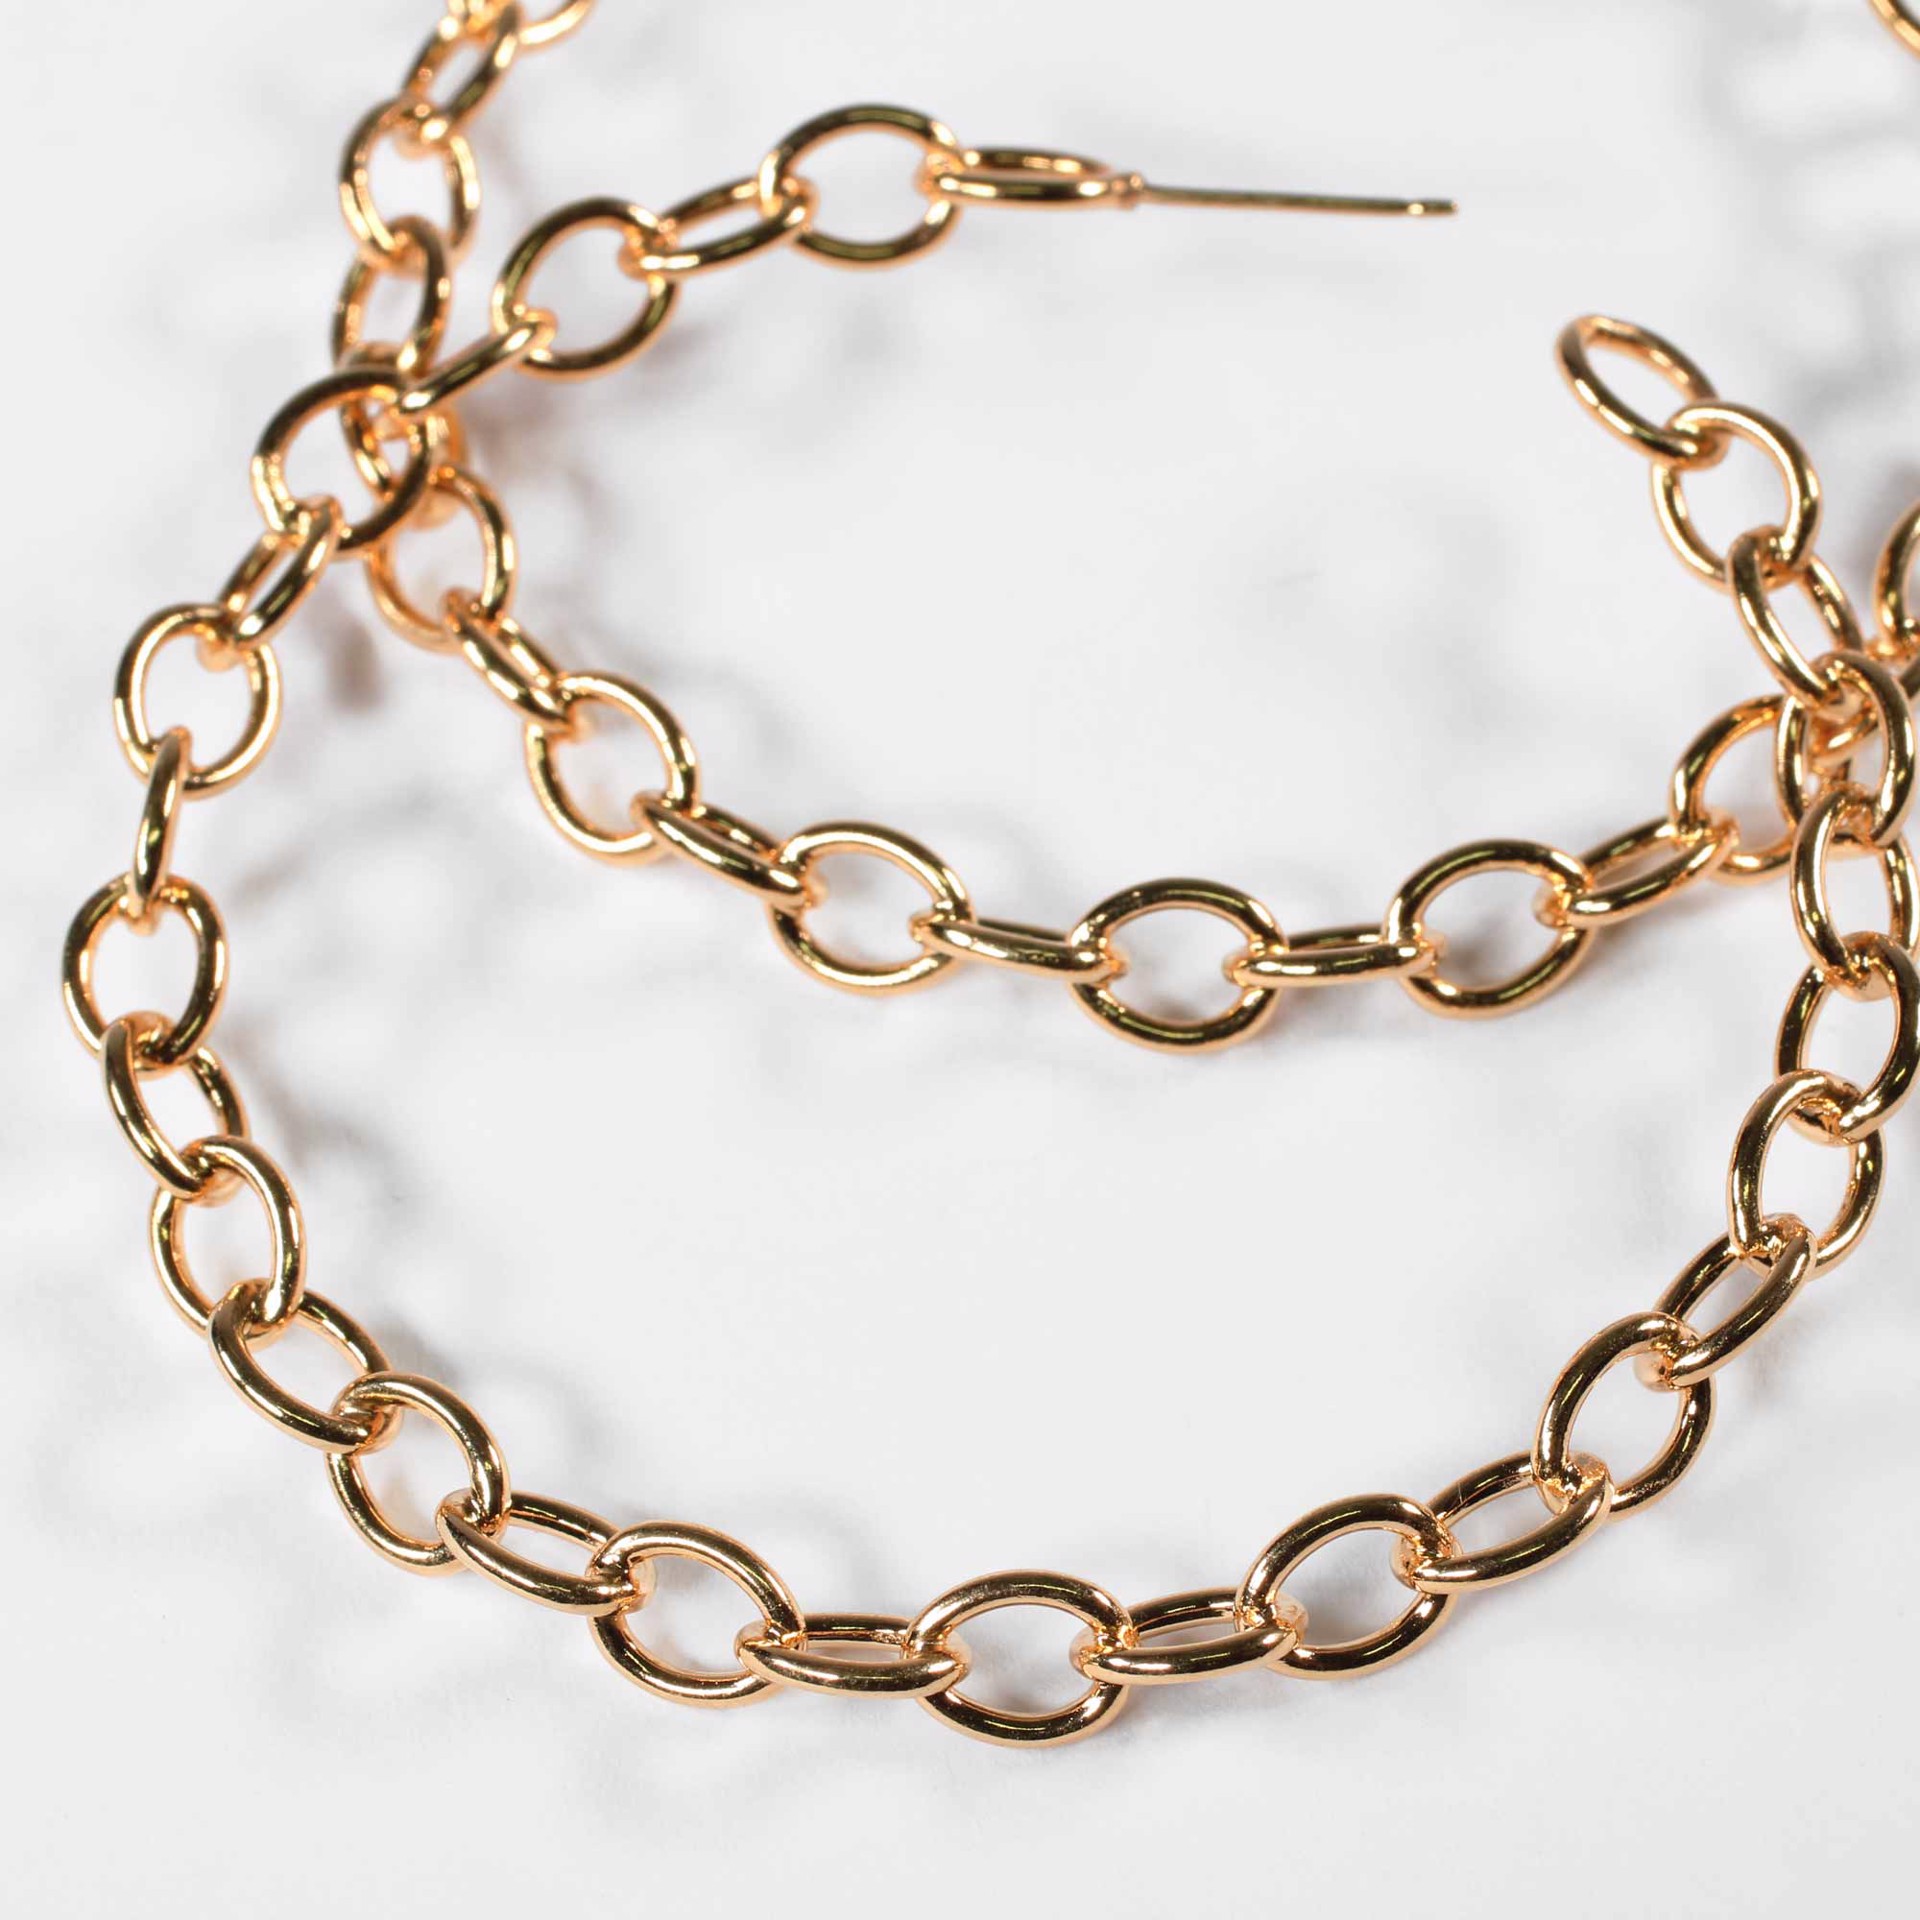 Gold Baby Chain Hoops by Amelia Toelke